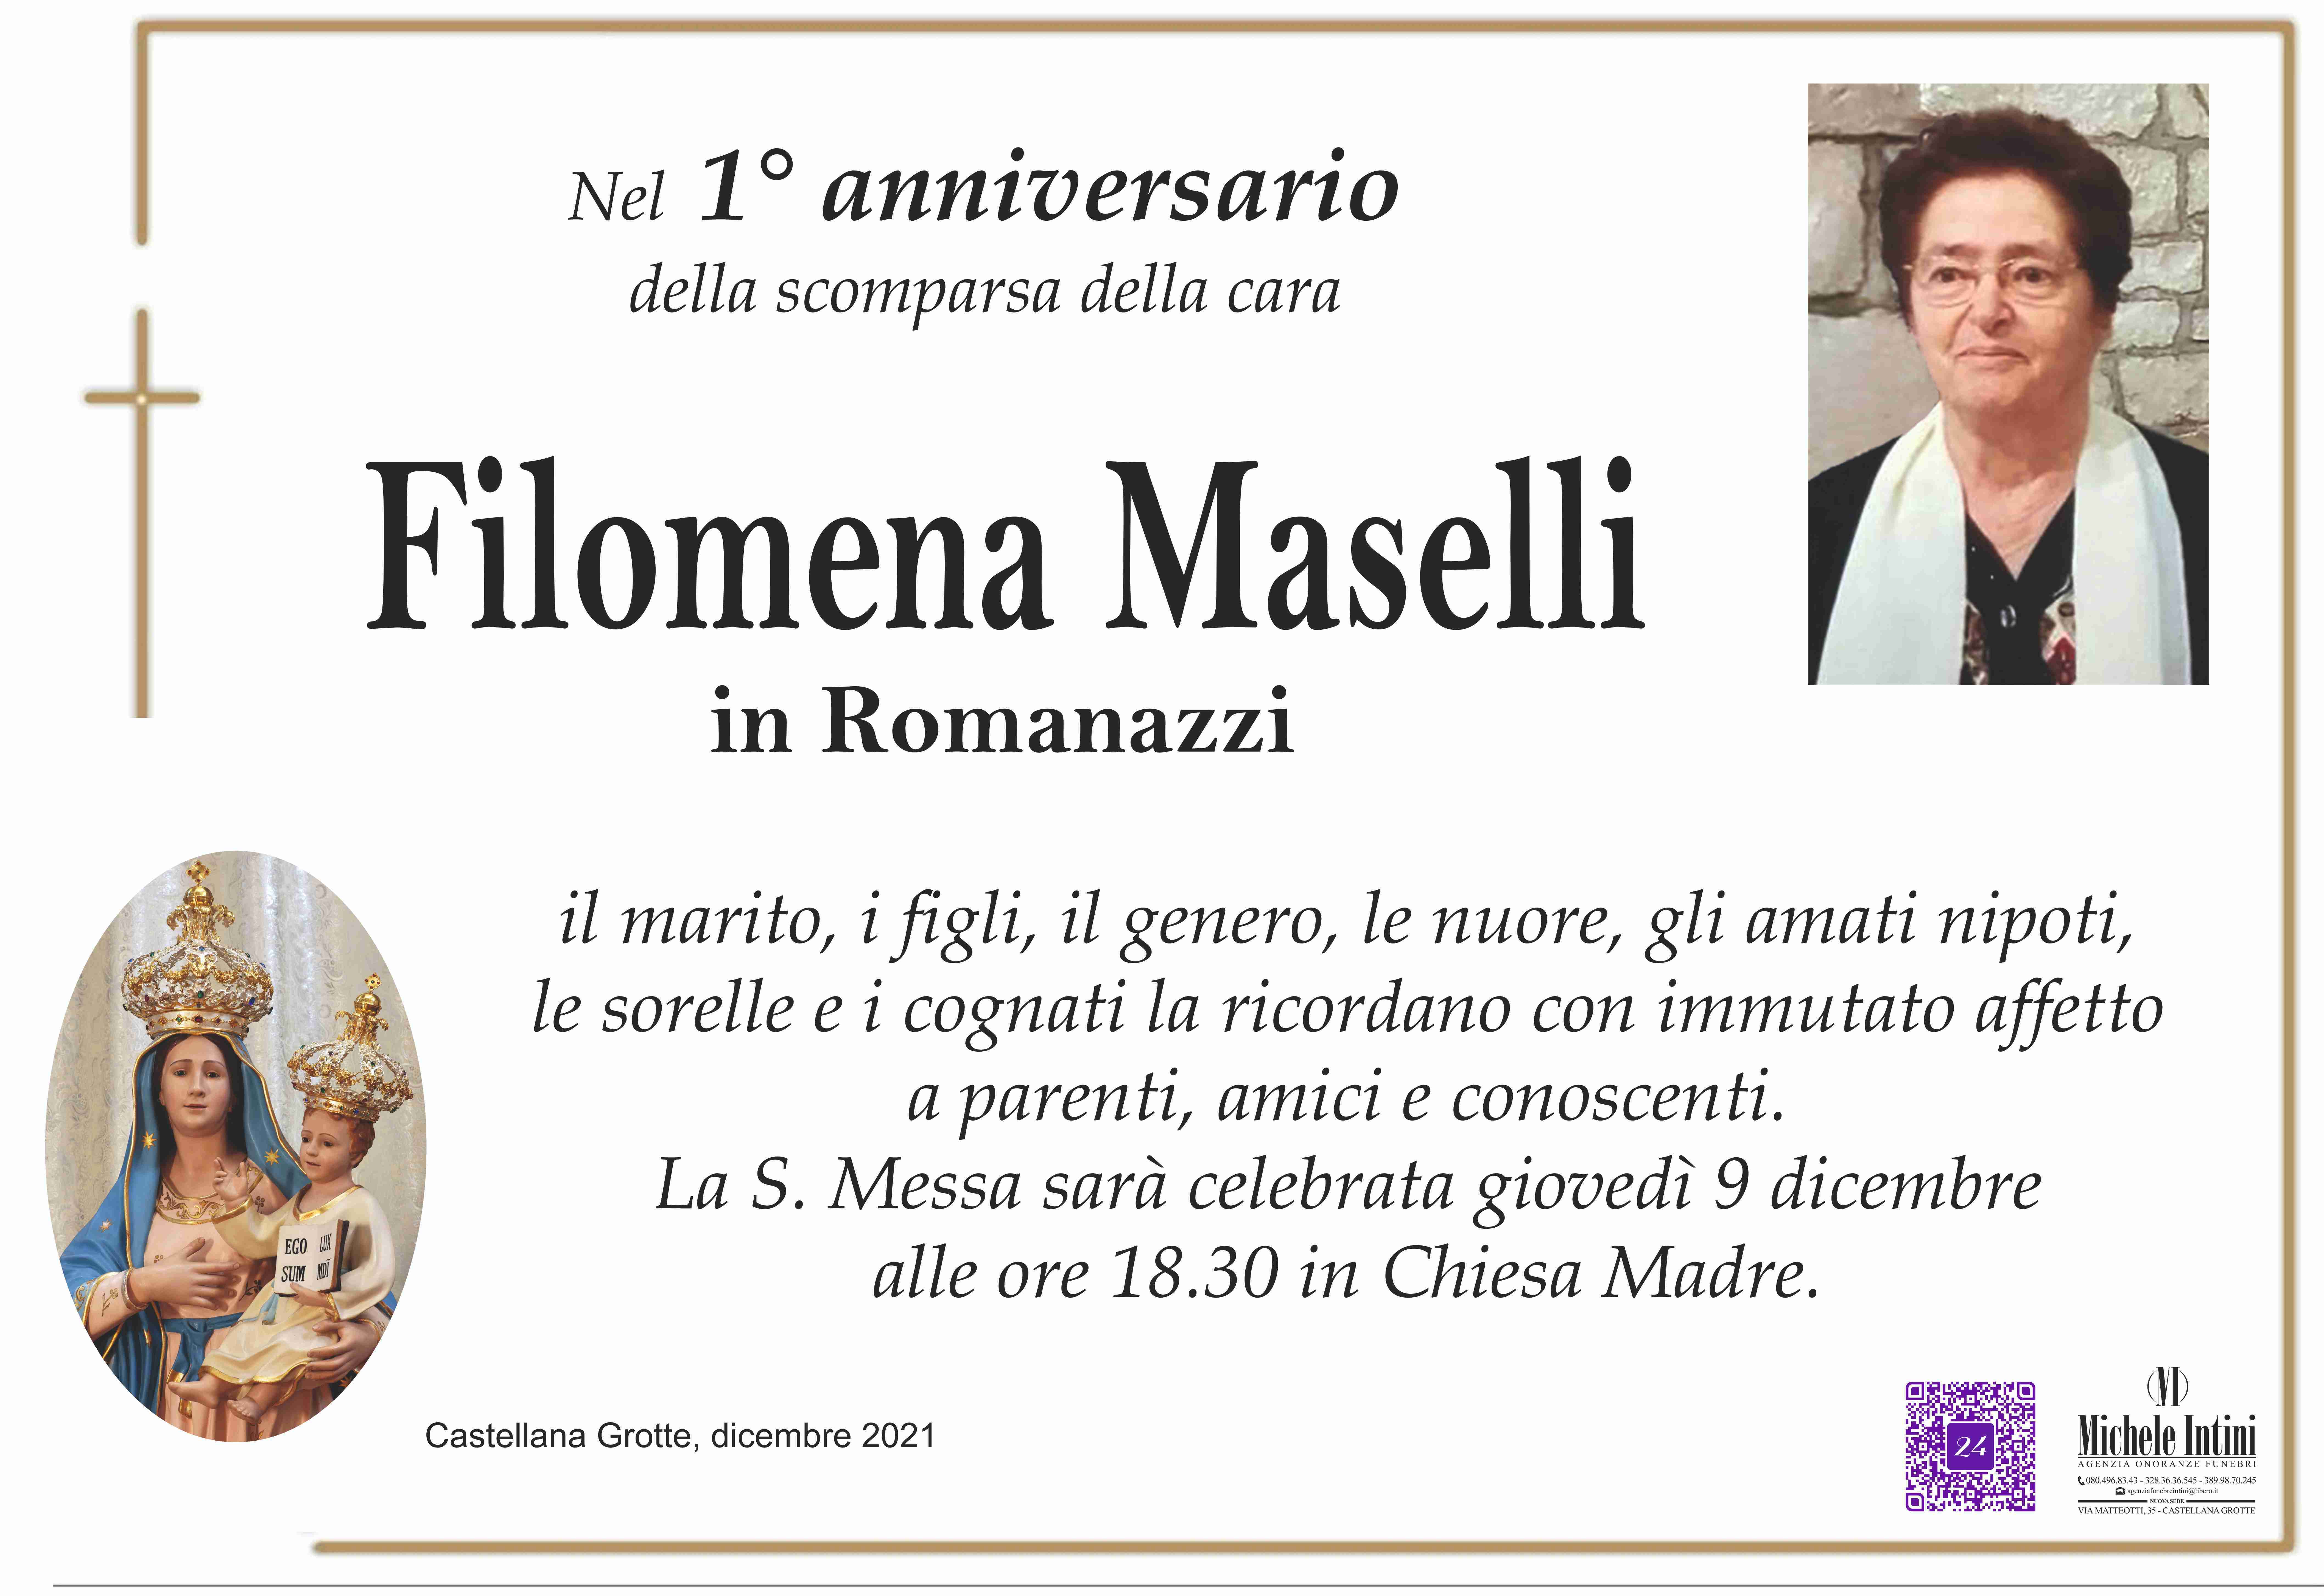 Filomena Maselli